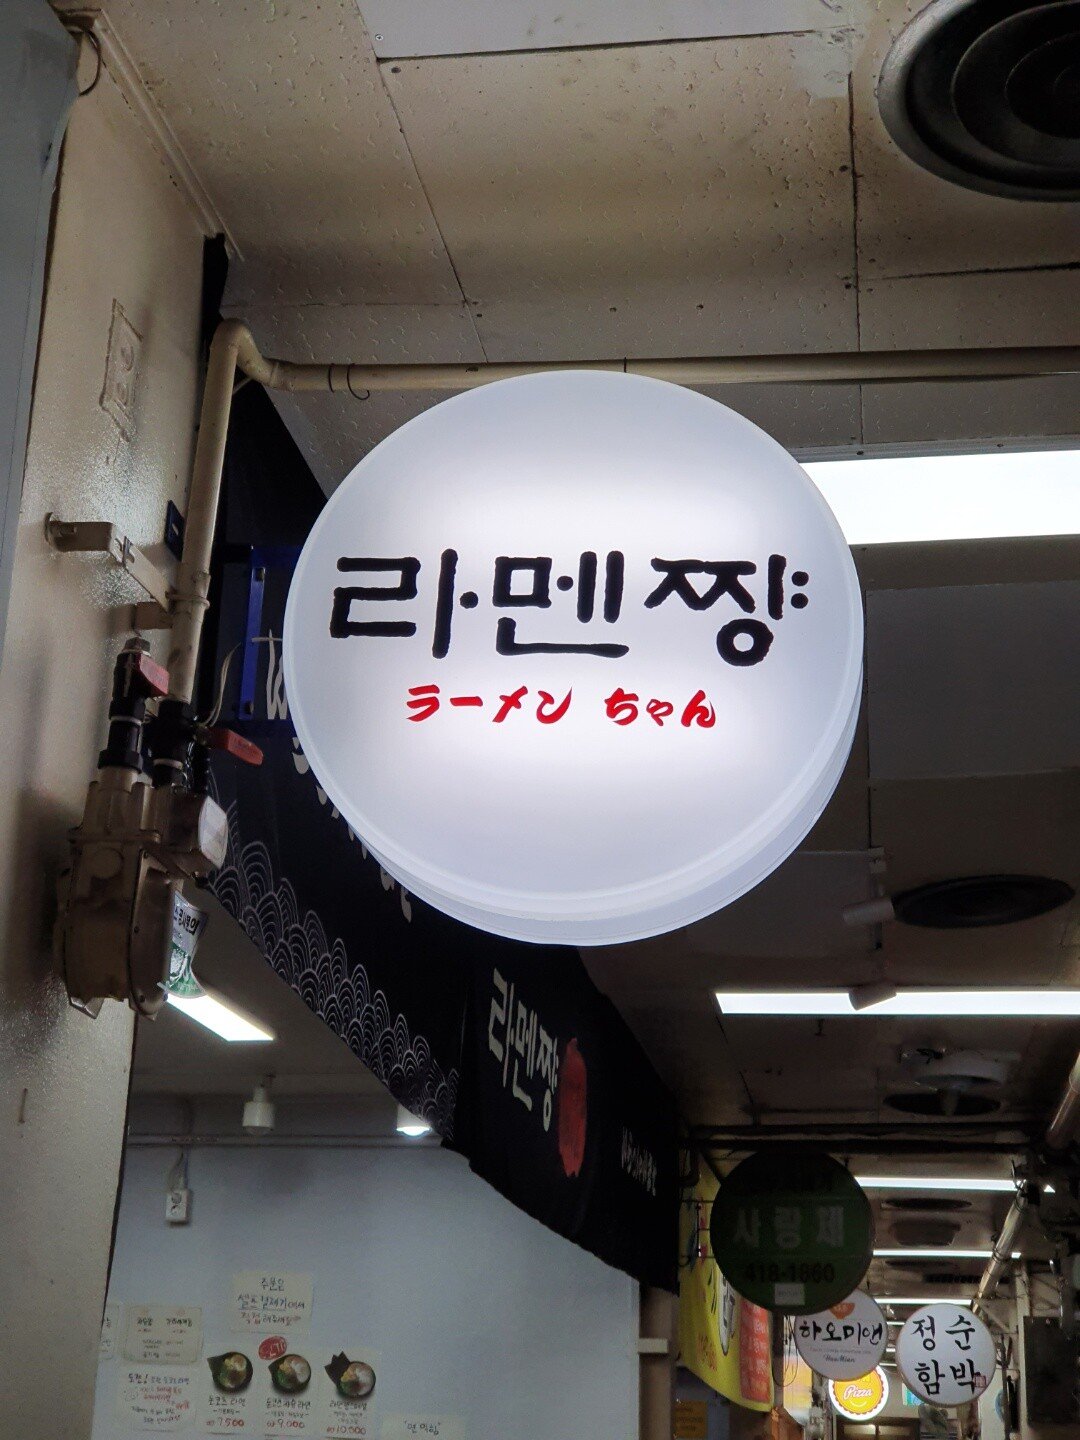 KakaoTalk_Image_2020-09-27-18-58-38_002.jpeg (스압) 서울 강남 지역 음식점 방문기 -8-